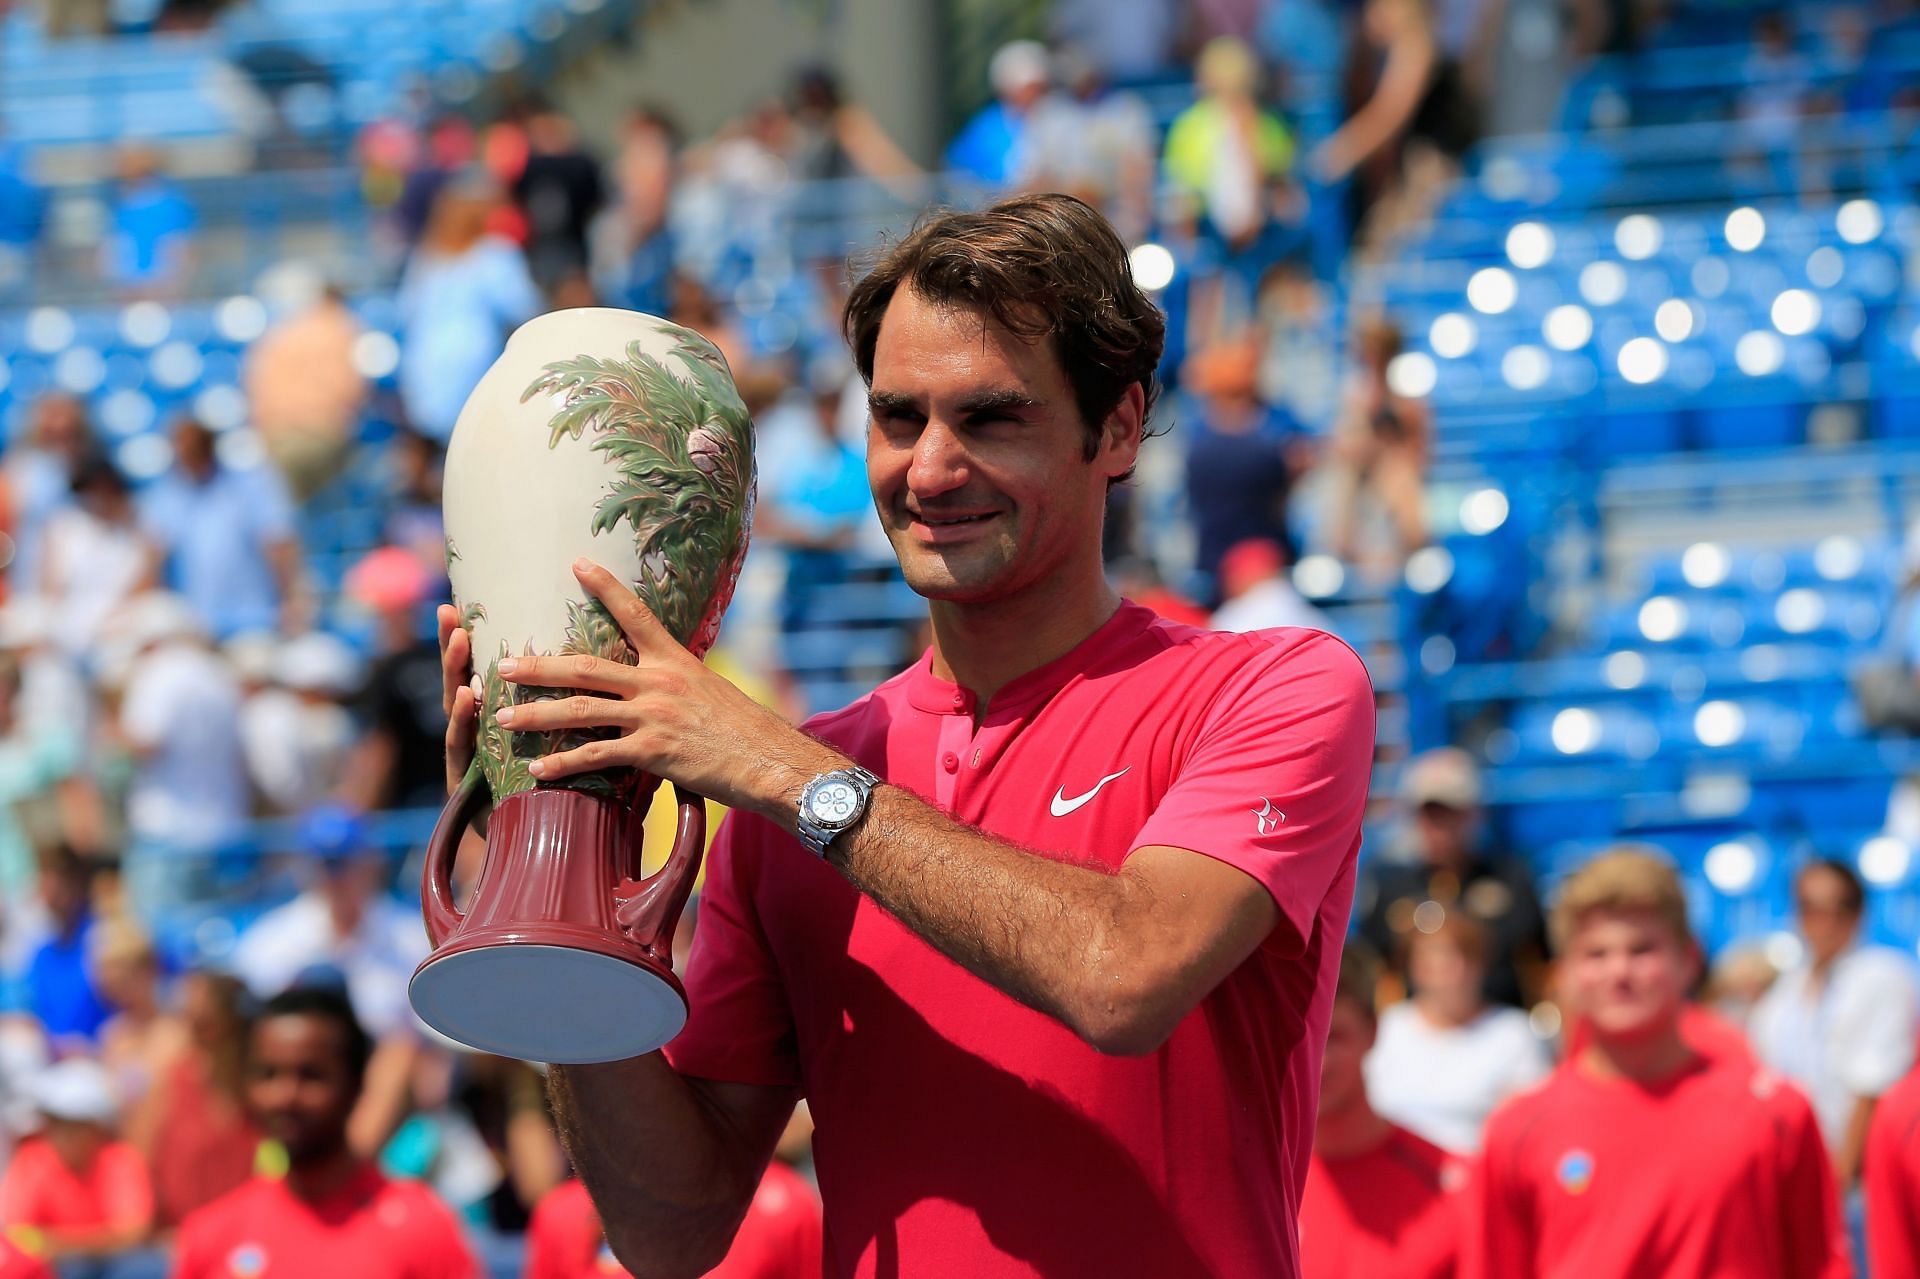 Roger Federer at the 2015 Cincinnati Open.